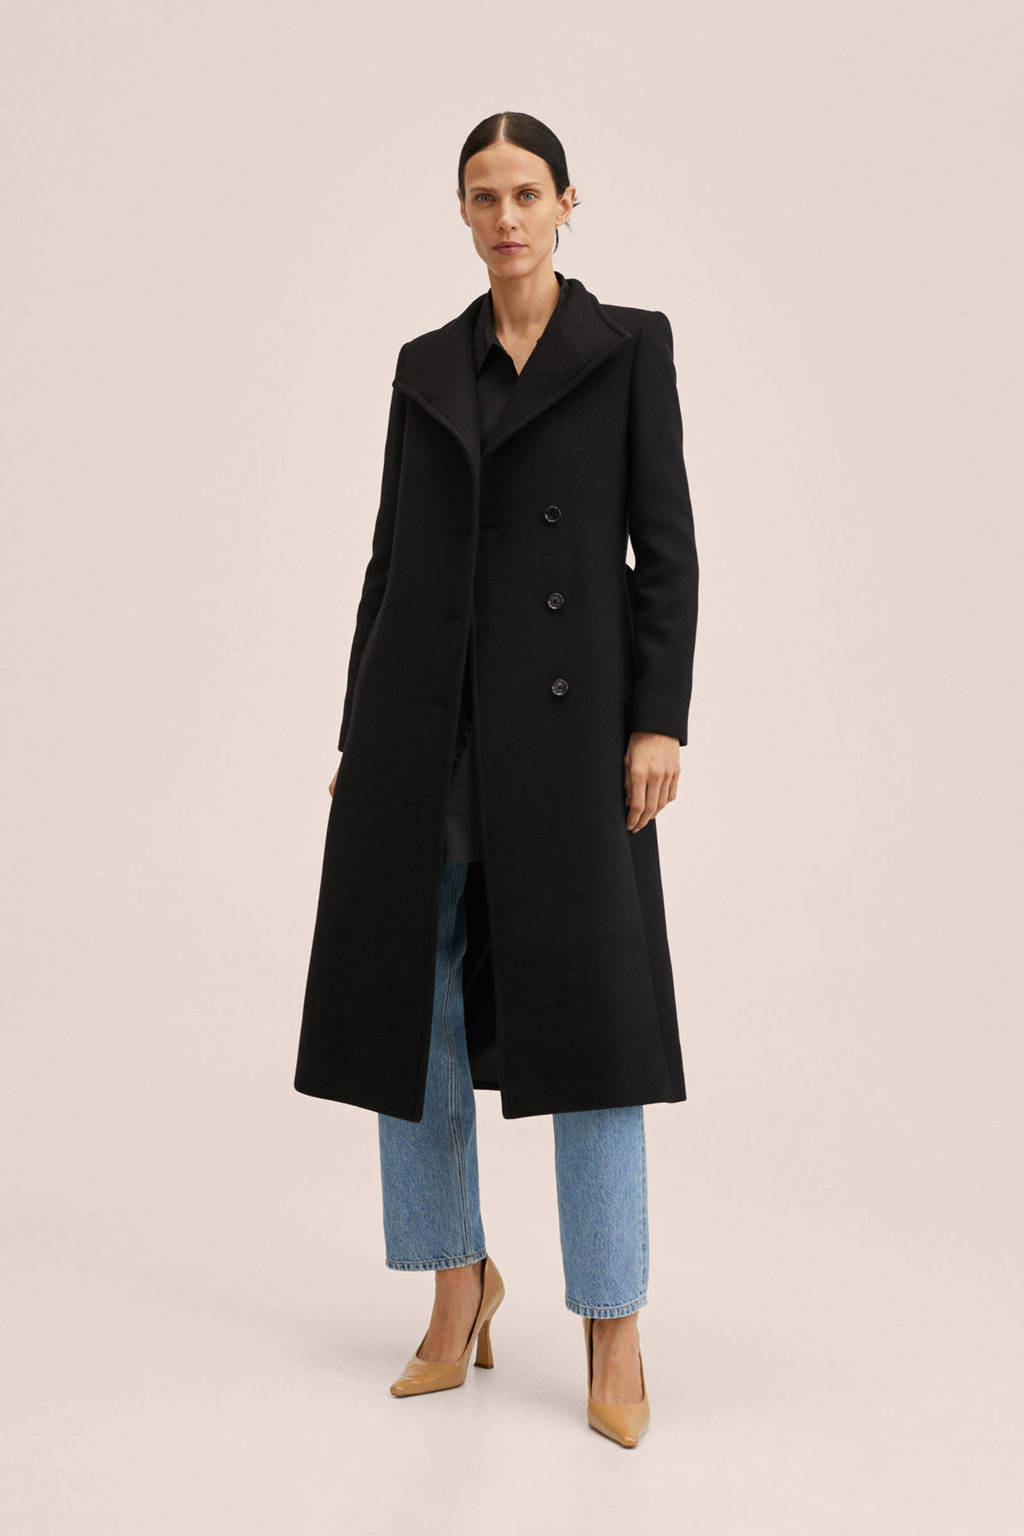 Zwarte dames Mango coat van wol met lange mouwen, reverskraag, knoopsluiting en ceintuur